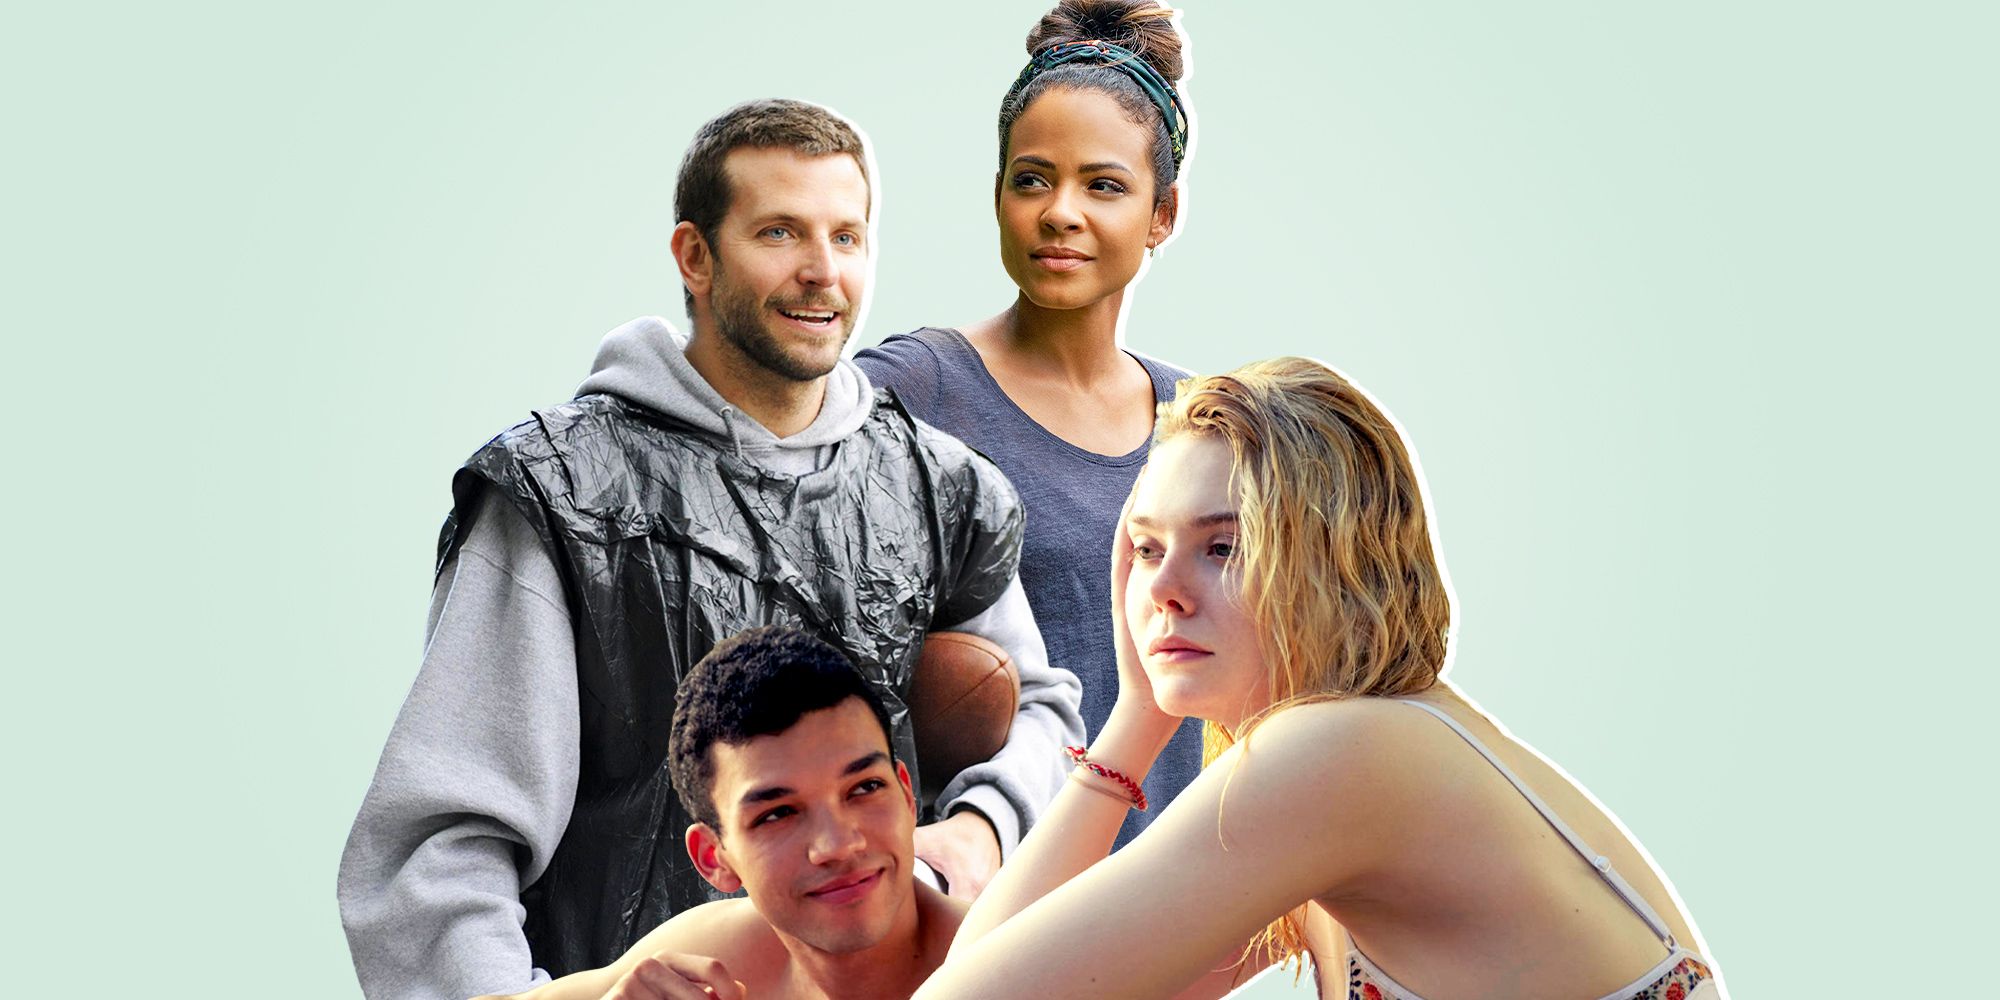 Drunk Girl Interracial Sex - 50 Best Romantic Movies on Netflix 2023 - Top Romance Films Streaming Now